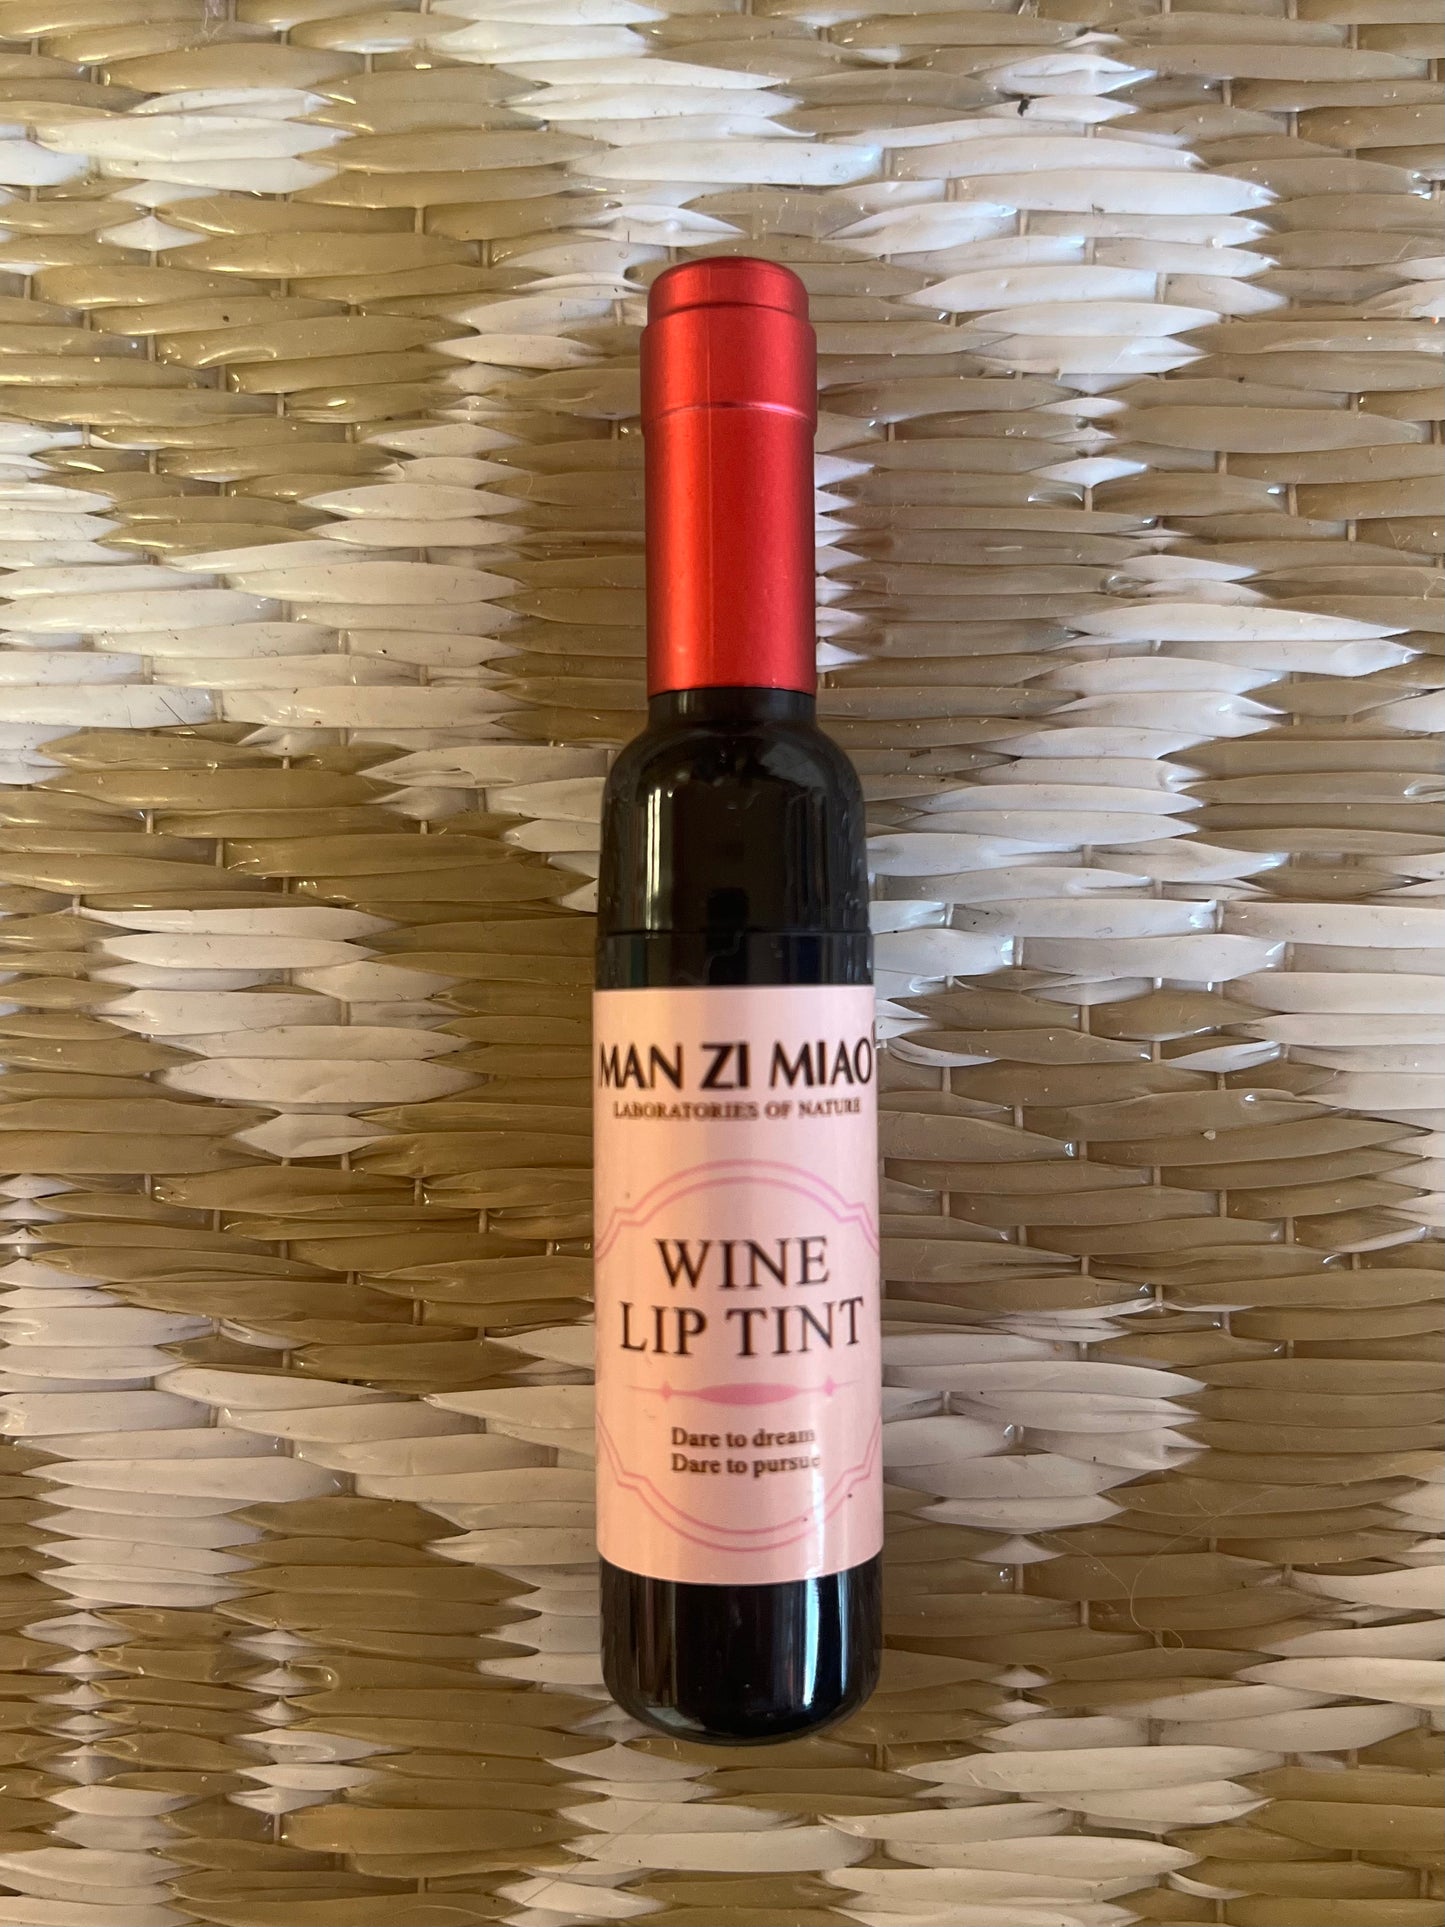 Wine lip tint